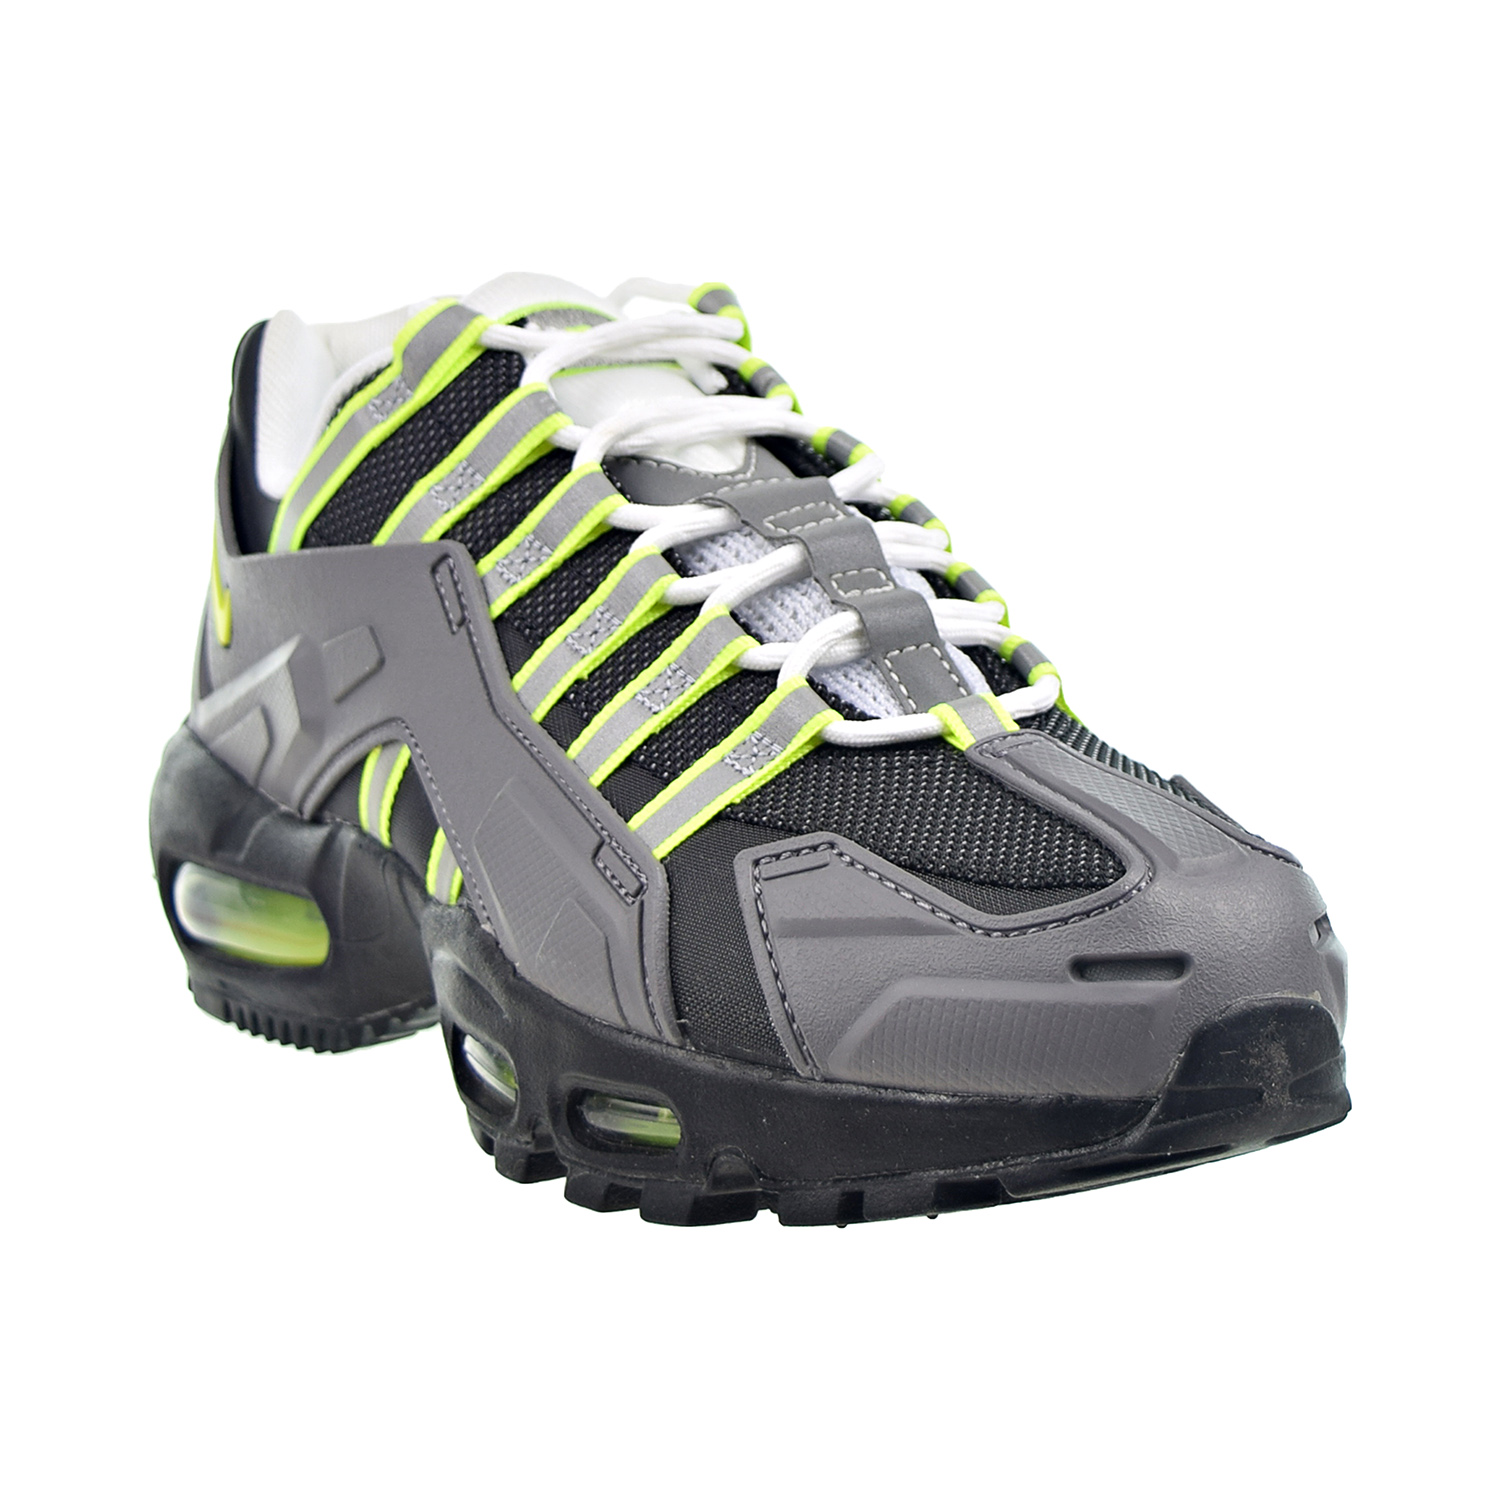 Nike Air Max 95 NDSTRKT AM 95 Men's Shoes Black-Neon Yellow-Medium Grey cz3591-002 - image 2 of 6